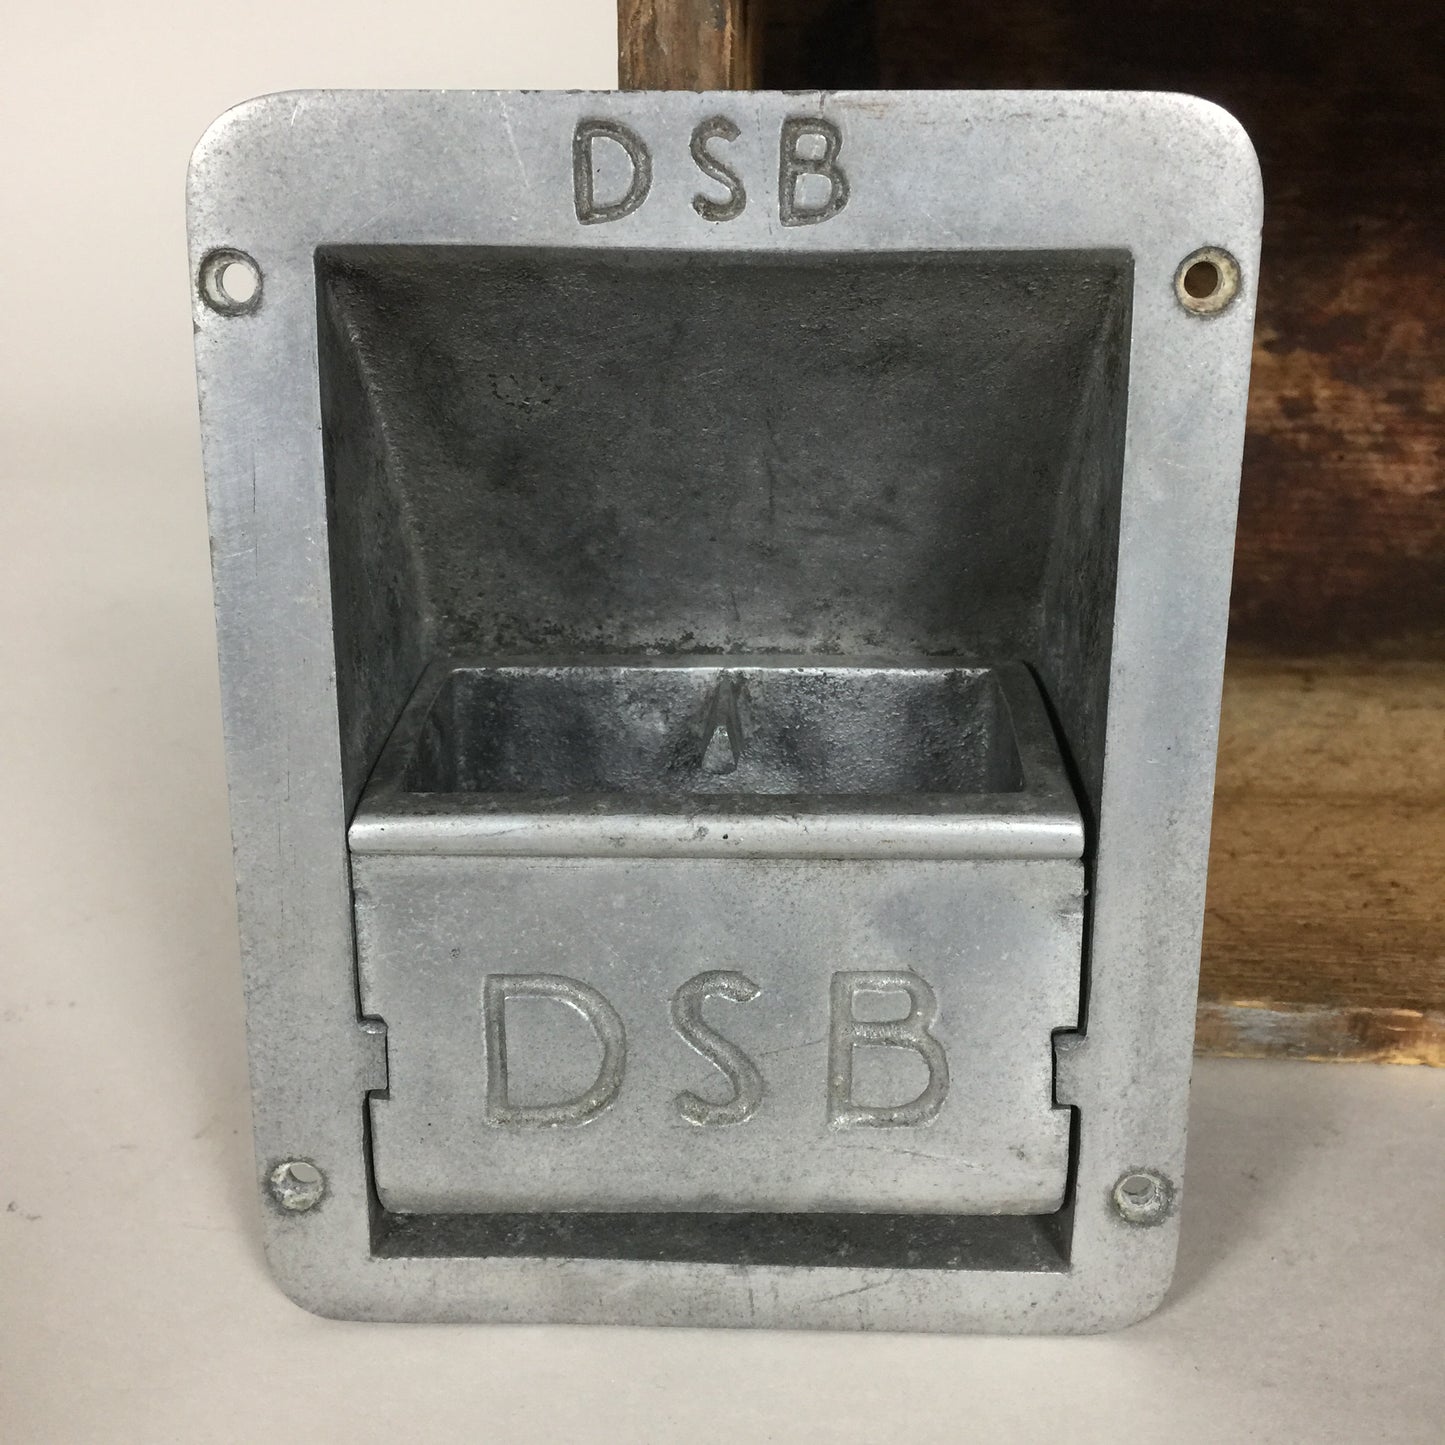 DSB askkopp i industridesign